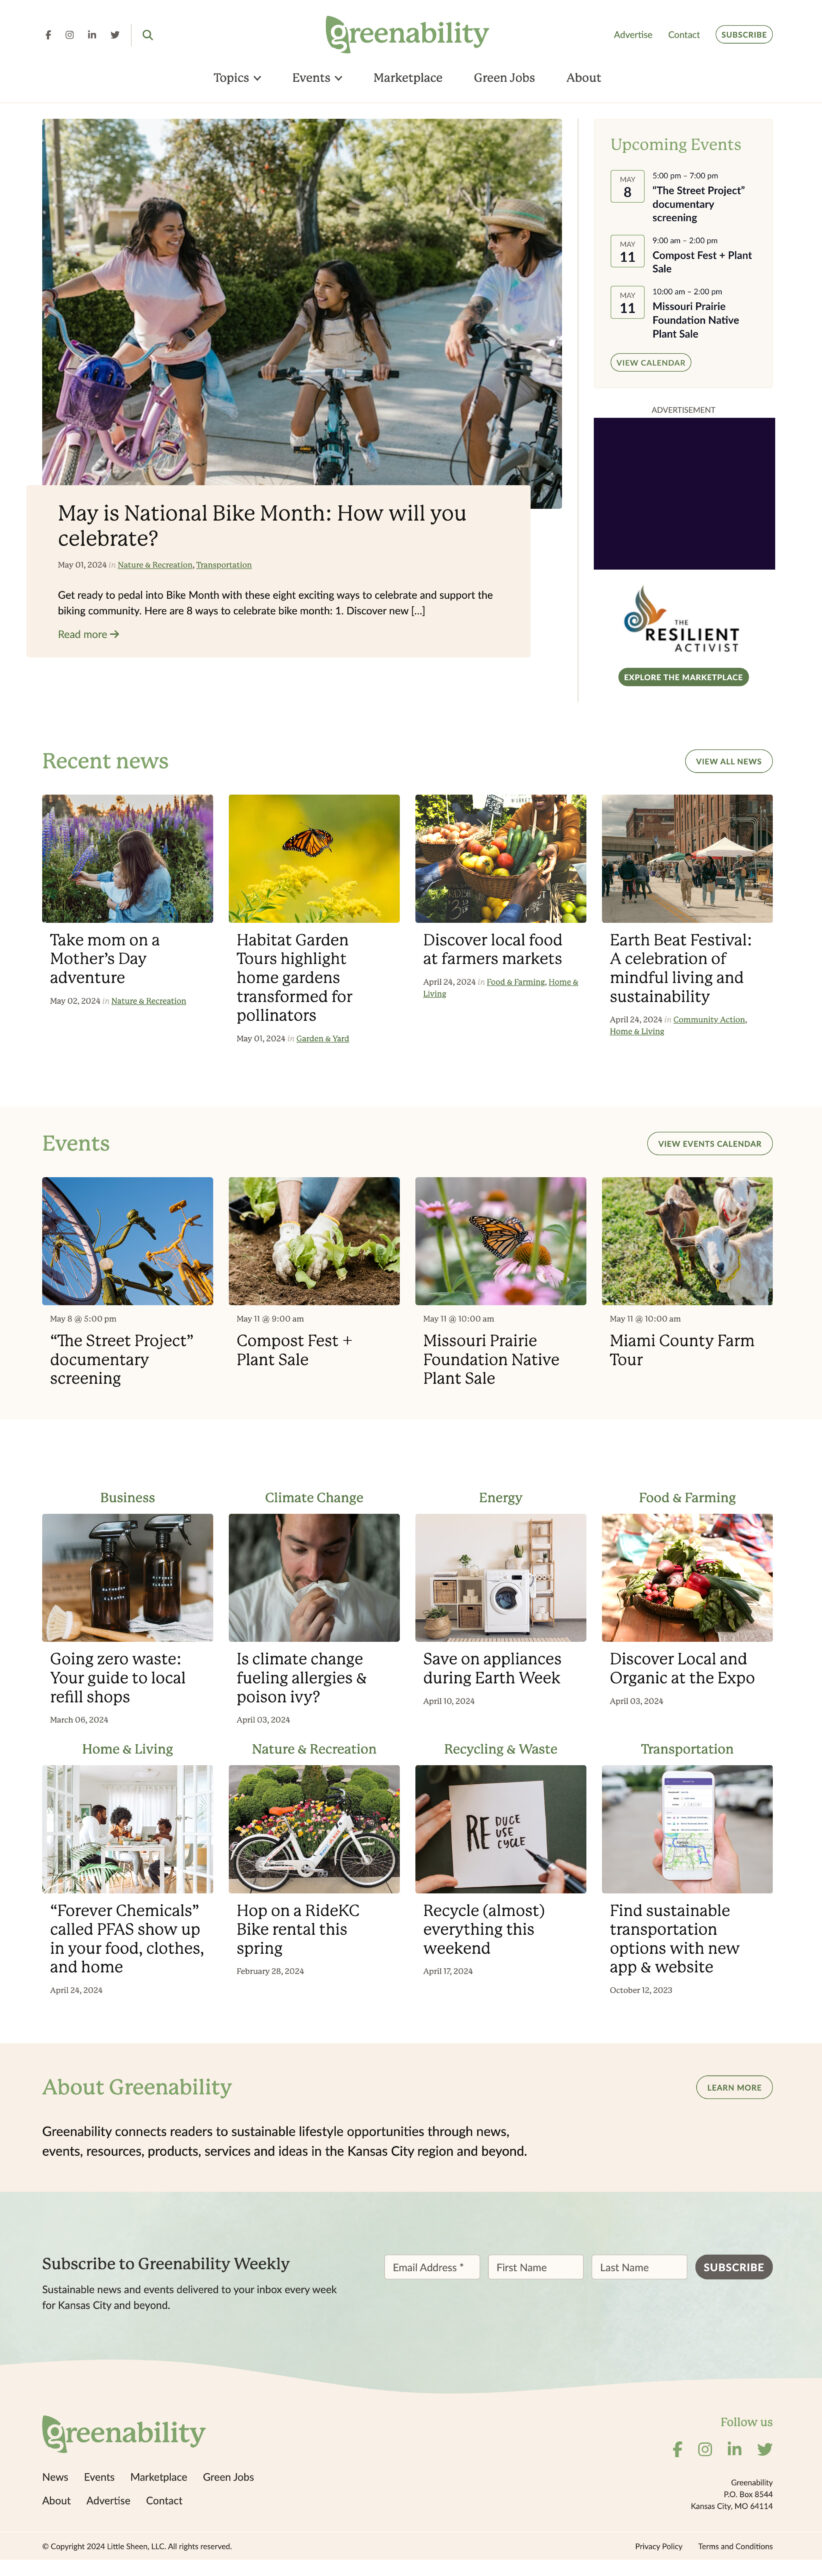 Greenability website homepage